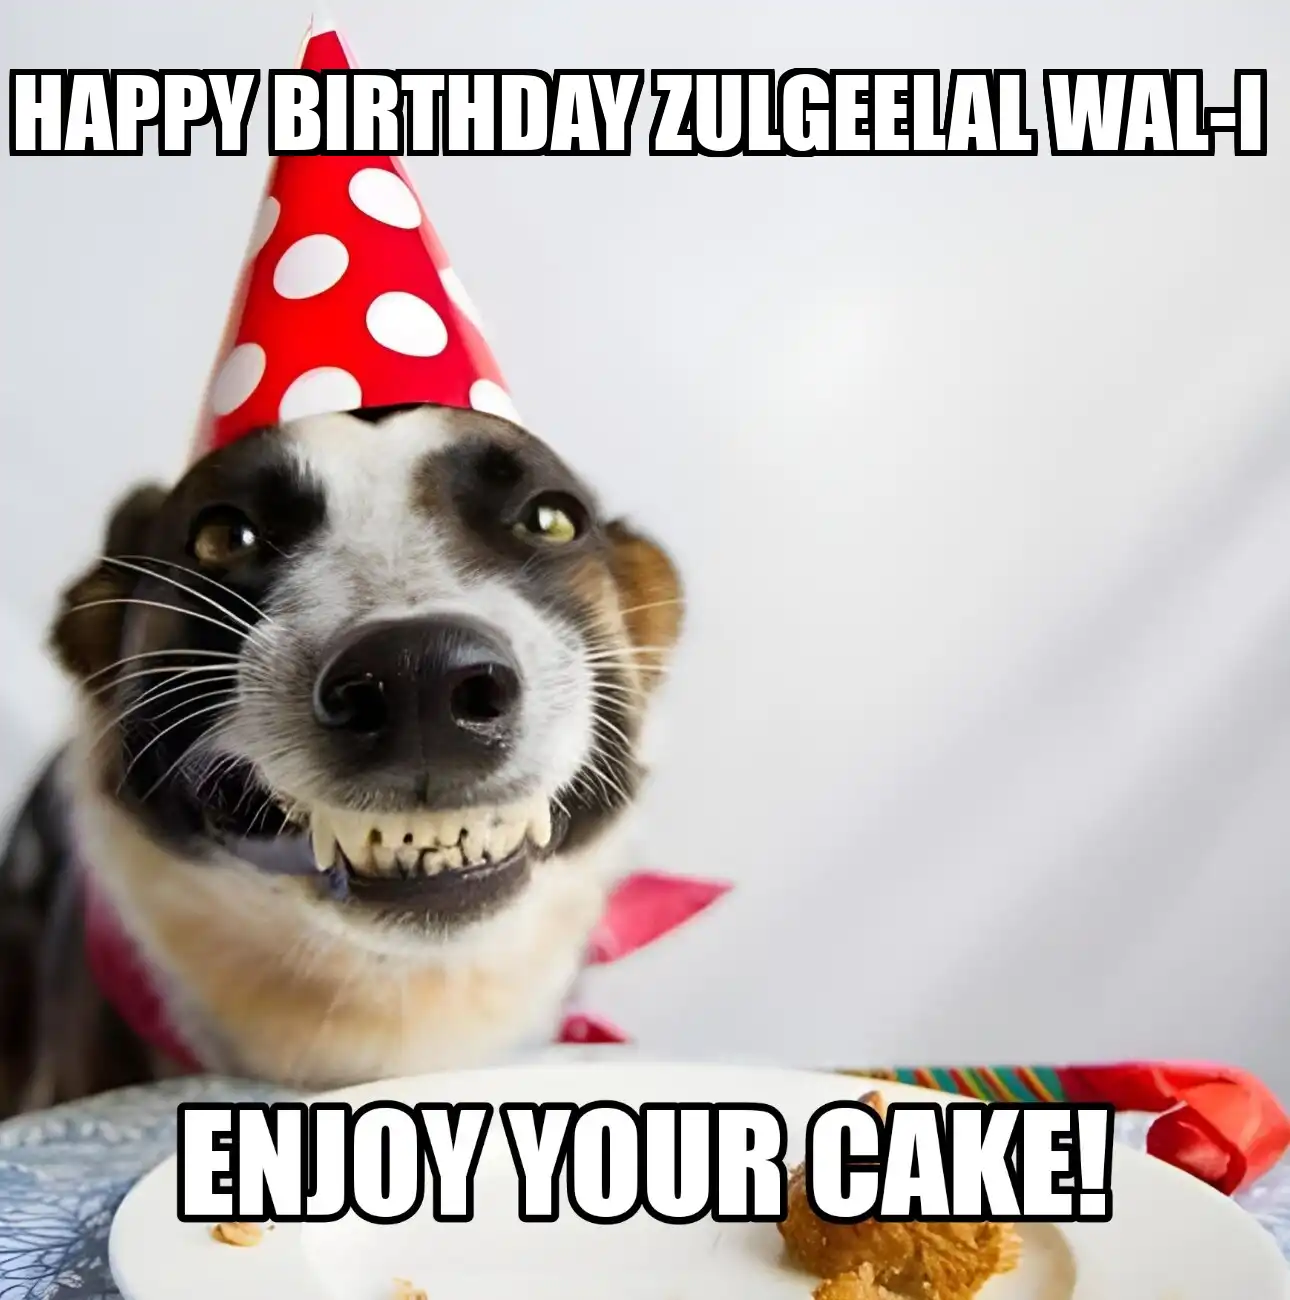 Happy Birthday Zulgeelal Wal-I Enjoy Your Cake Dog Meme